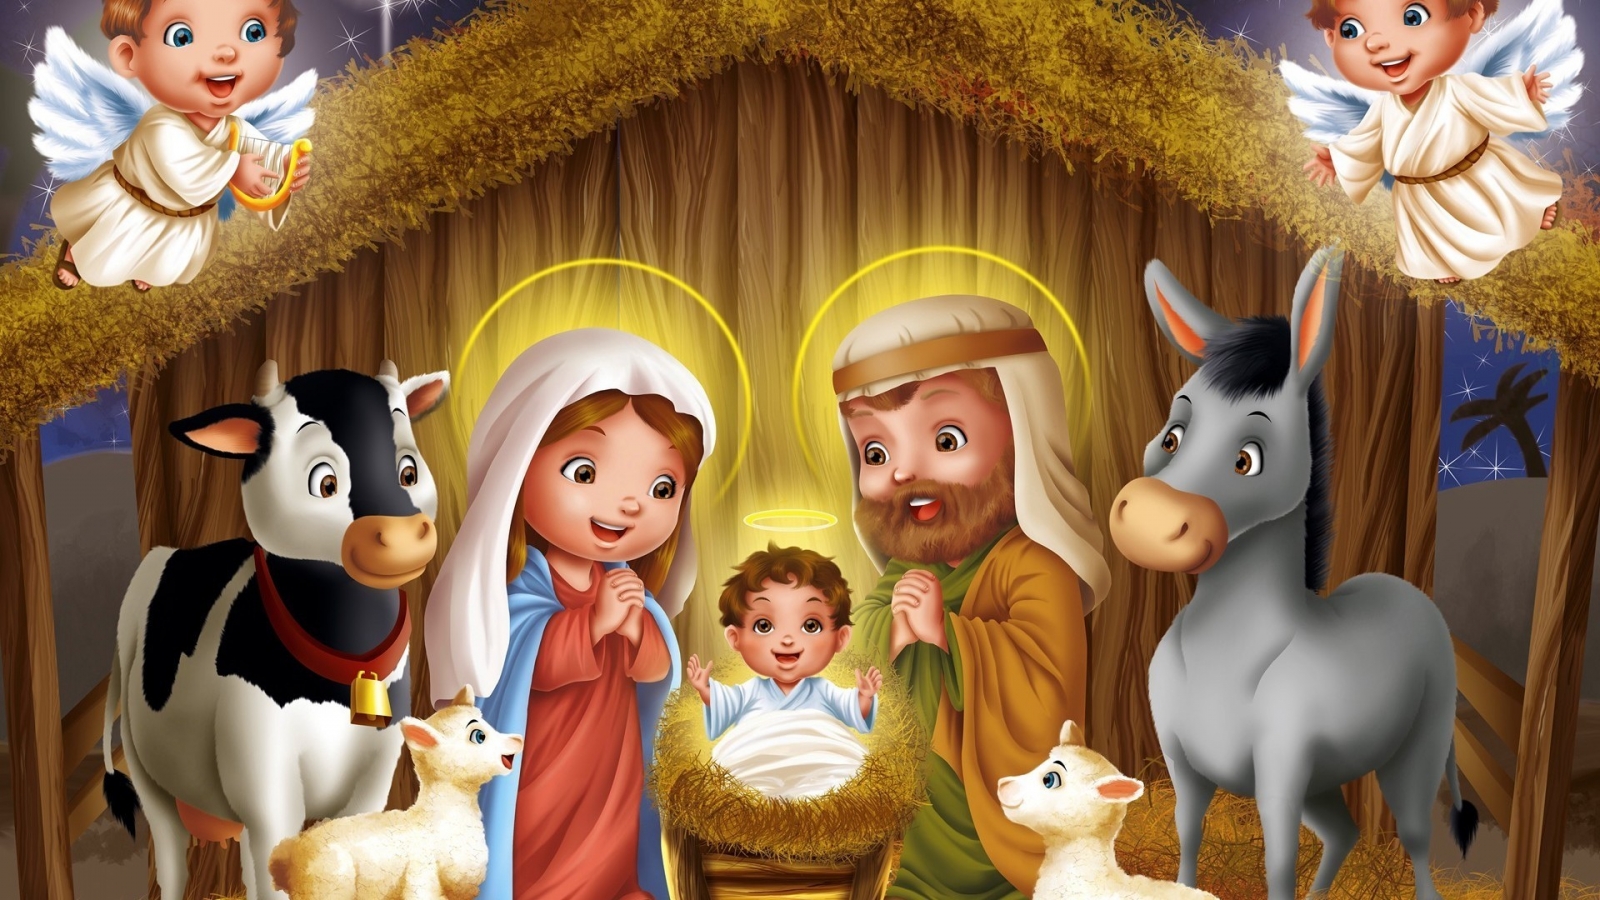 Story Birth of Jesus Christ for 1600 x 900 HDTV resolution